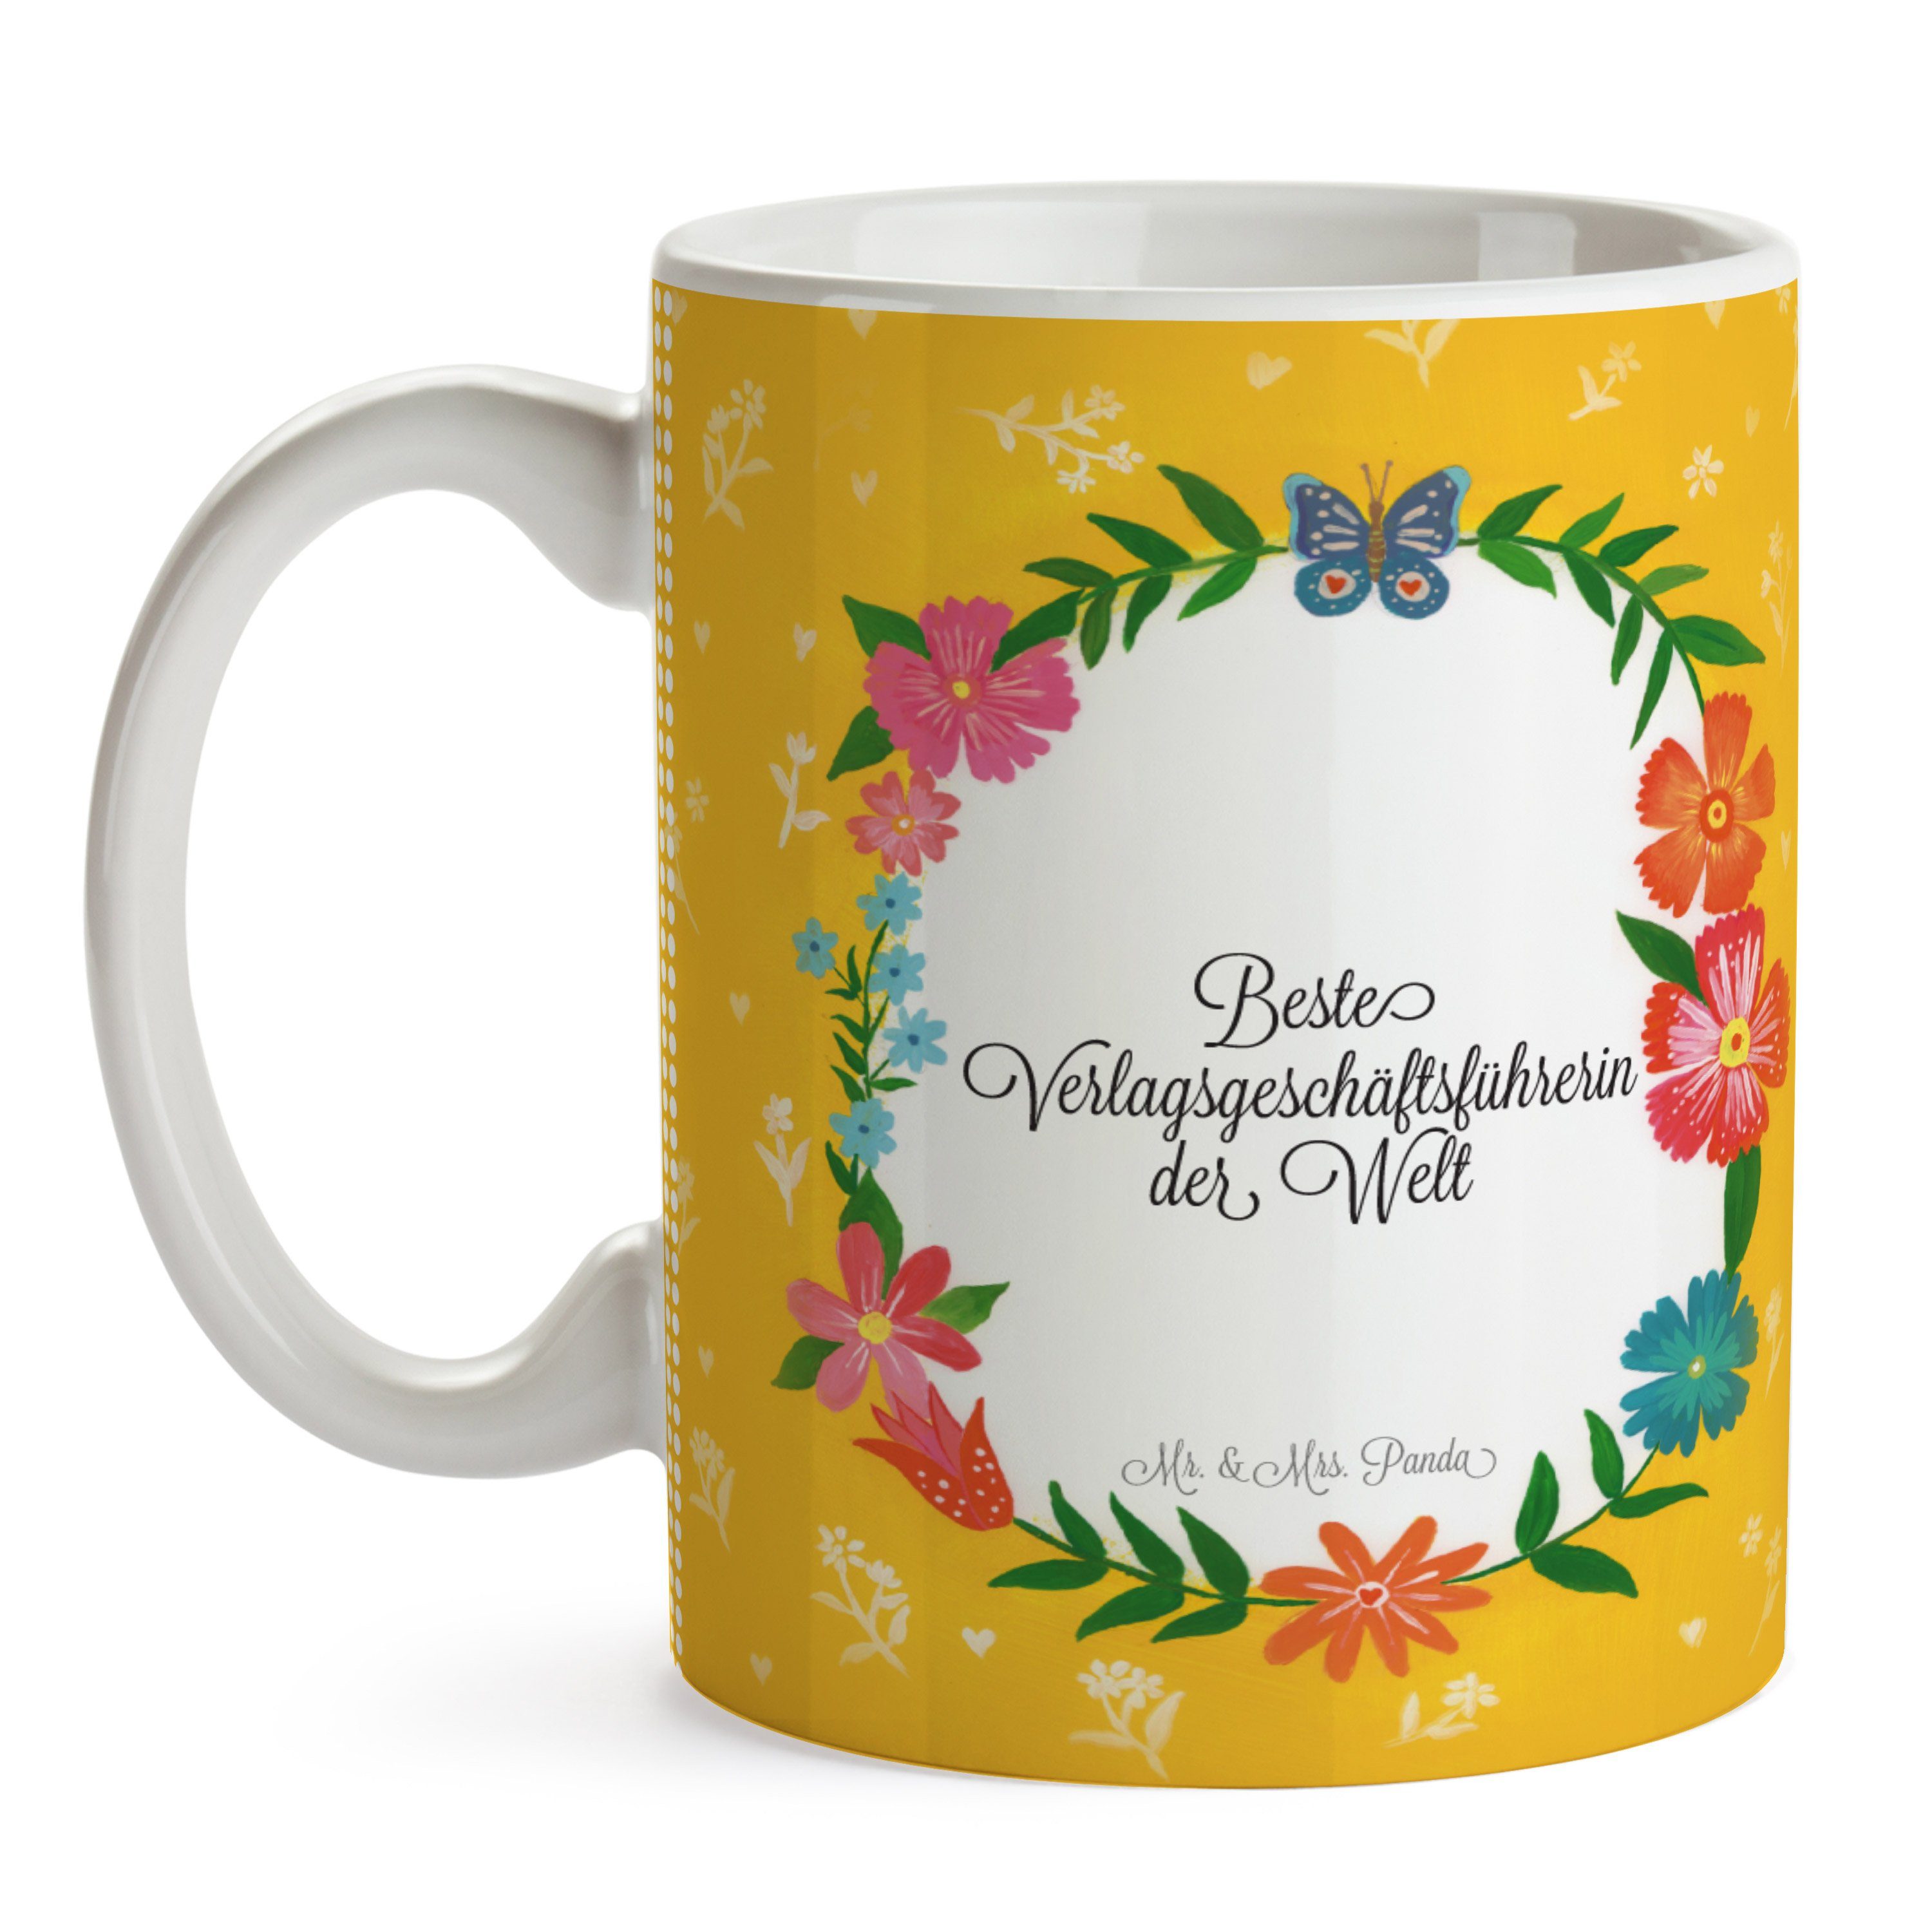 Mr. & Mrs. - Geschenk, Geschenk Panda Verlagsgeschäftsführerin Tasse Abschluss, Keramik Kaffe, Tasse